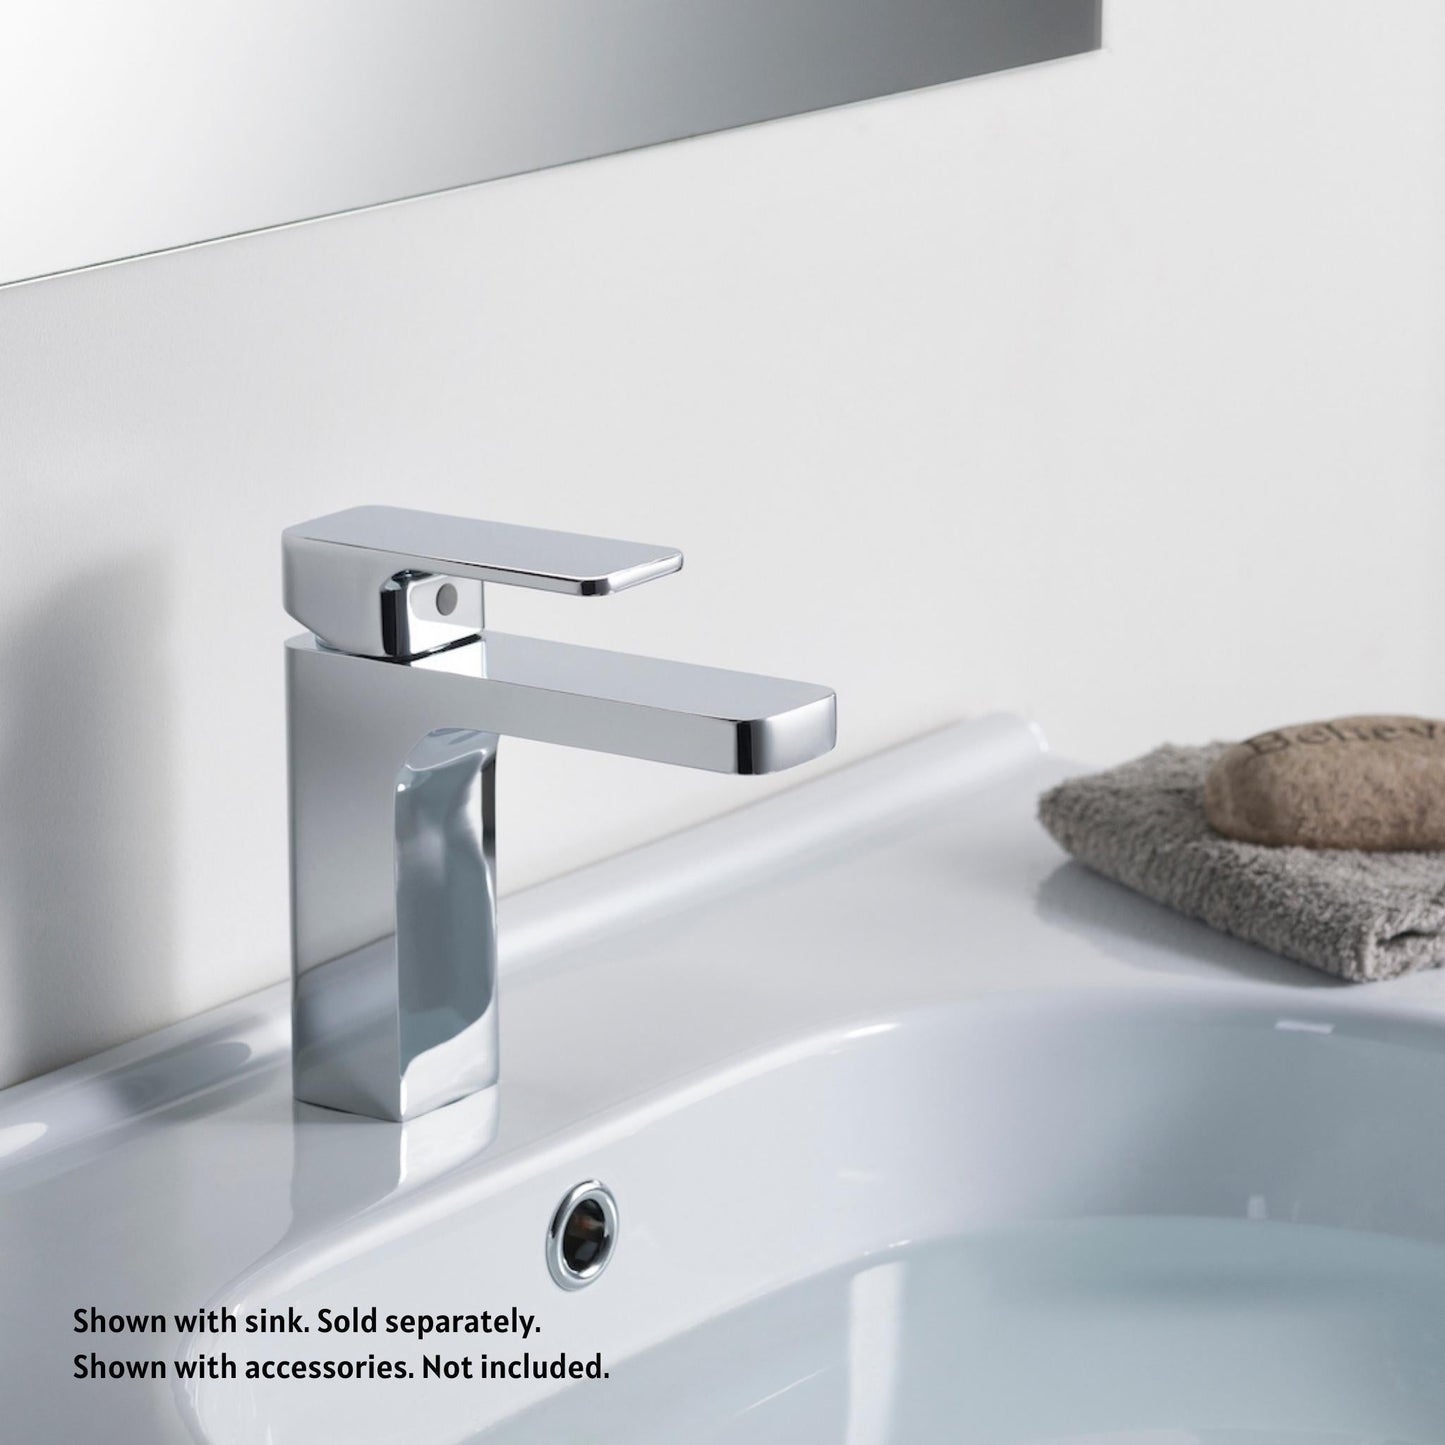 Blossom F01 118 5" x 6" Chrome Lever Handle Bathroom Sink Single Hole Faucet